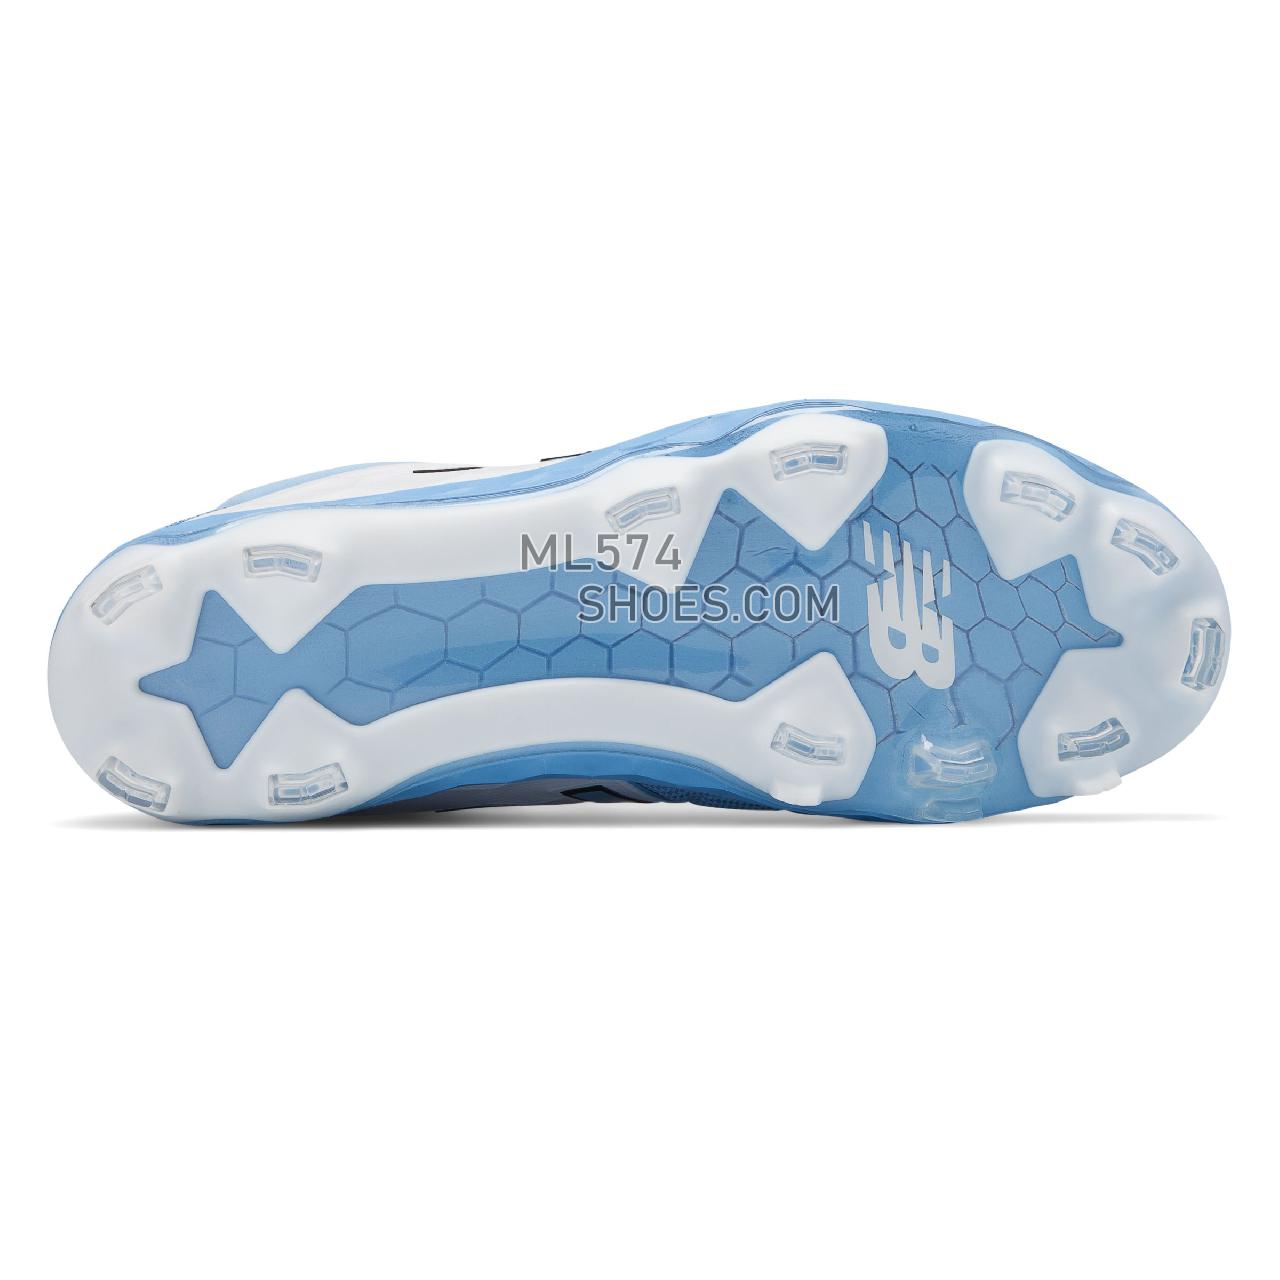 New Balance Fresh Foam 3000v4 TPU - Men's 3000 - Baseball Baby Blue with White - PL3000D4